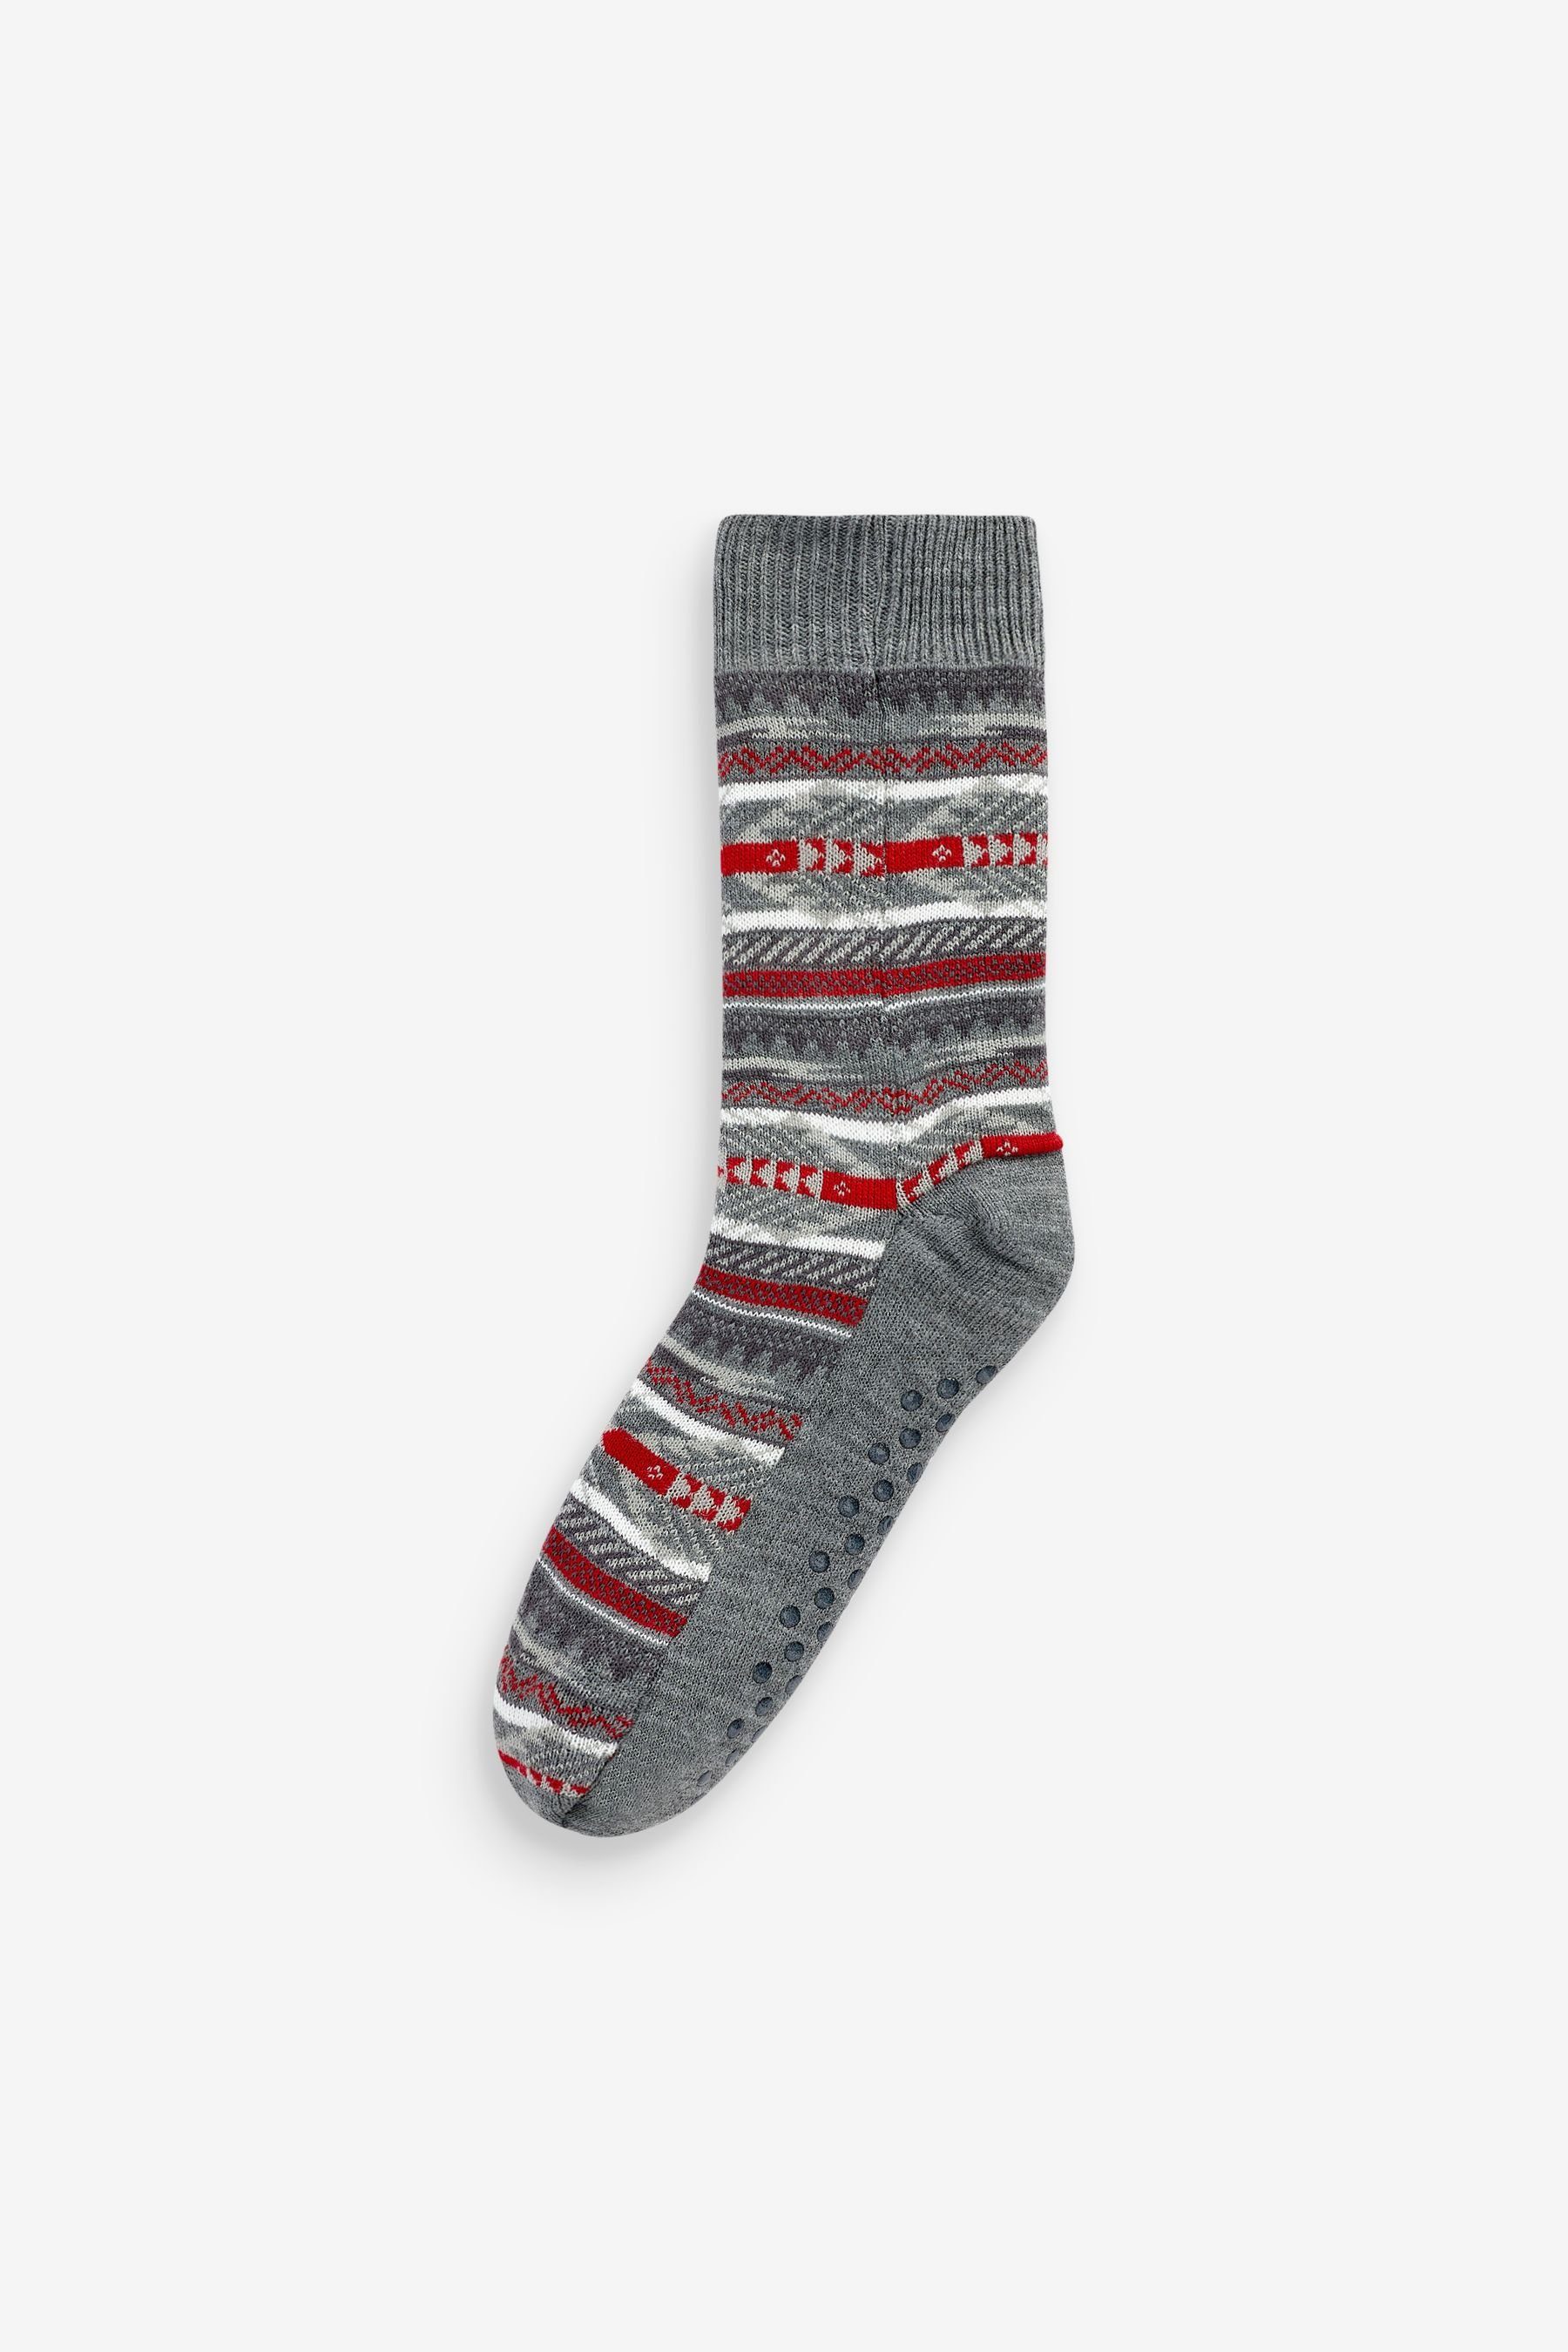 Aztec (1-Paar) Print mit Haussocken Slipper-Socken Next Zopfmuster Grey